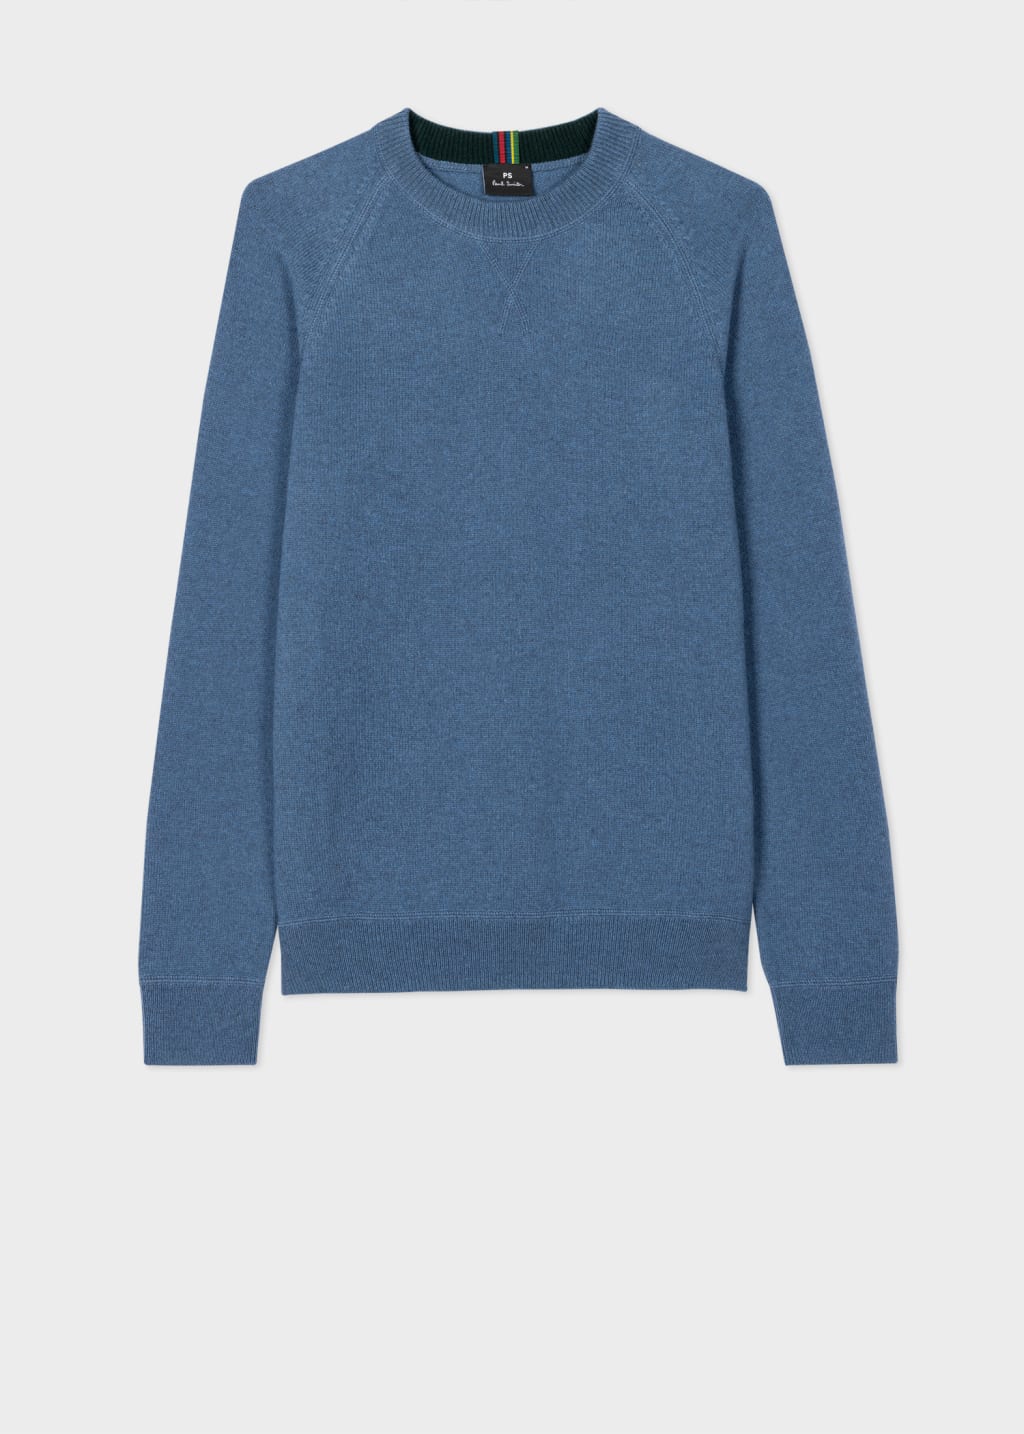 Men's Blue Merino Wool Raglan Sweater